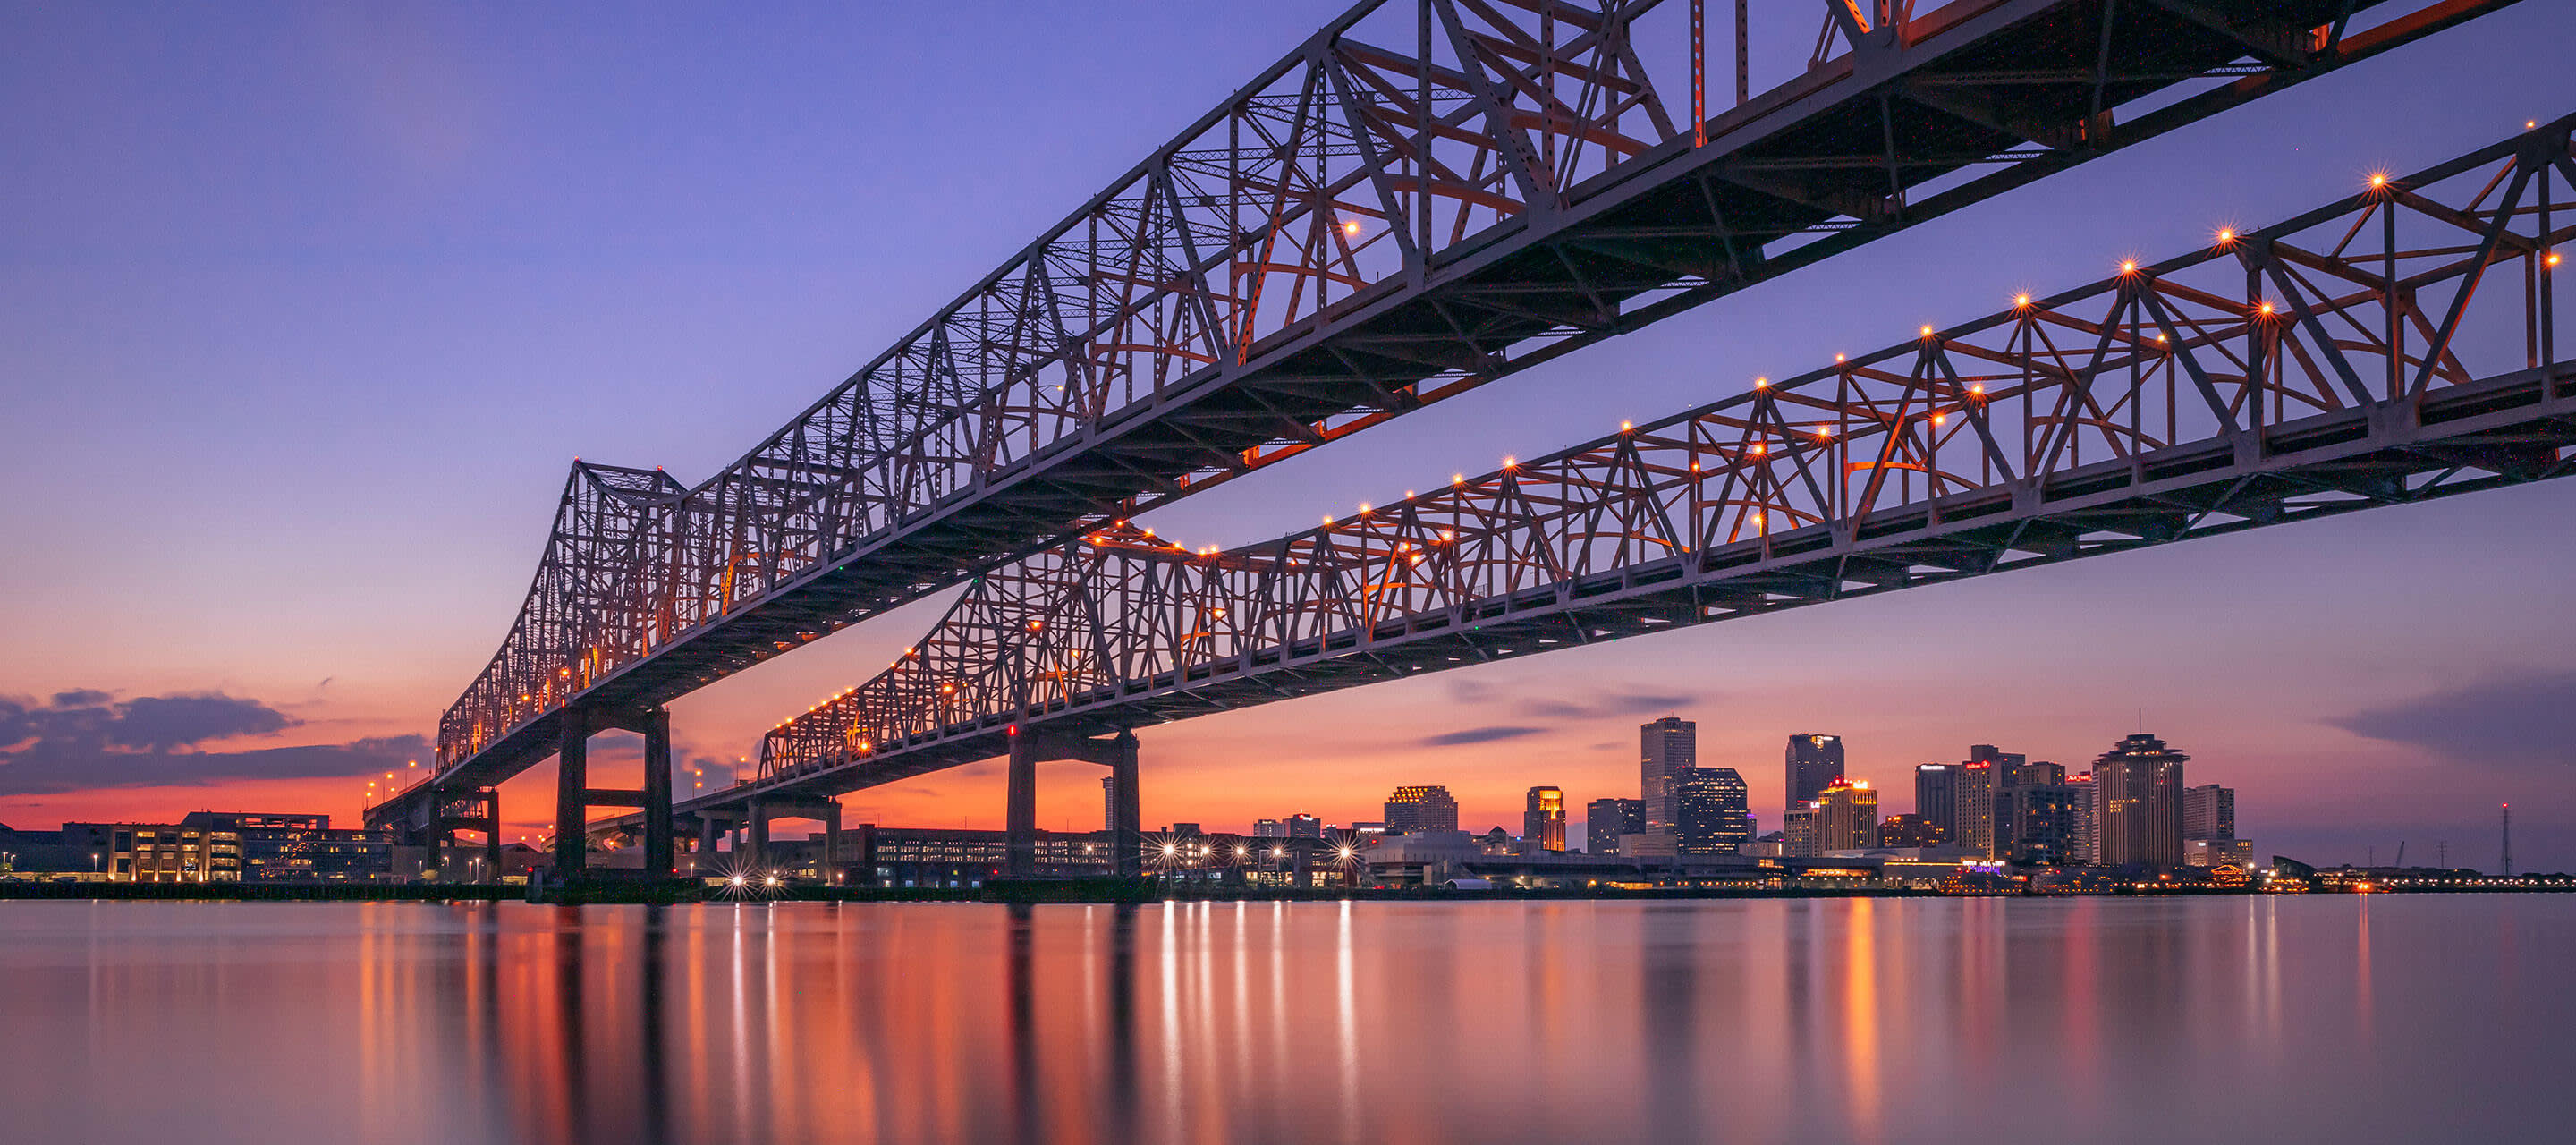 image shows sunset over New Orleans, LA bridge